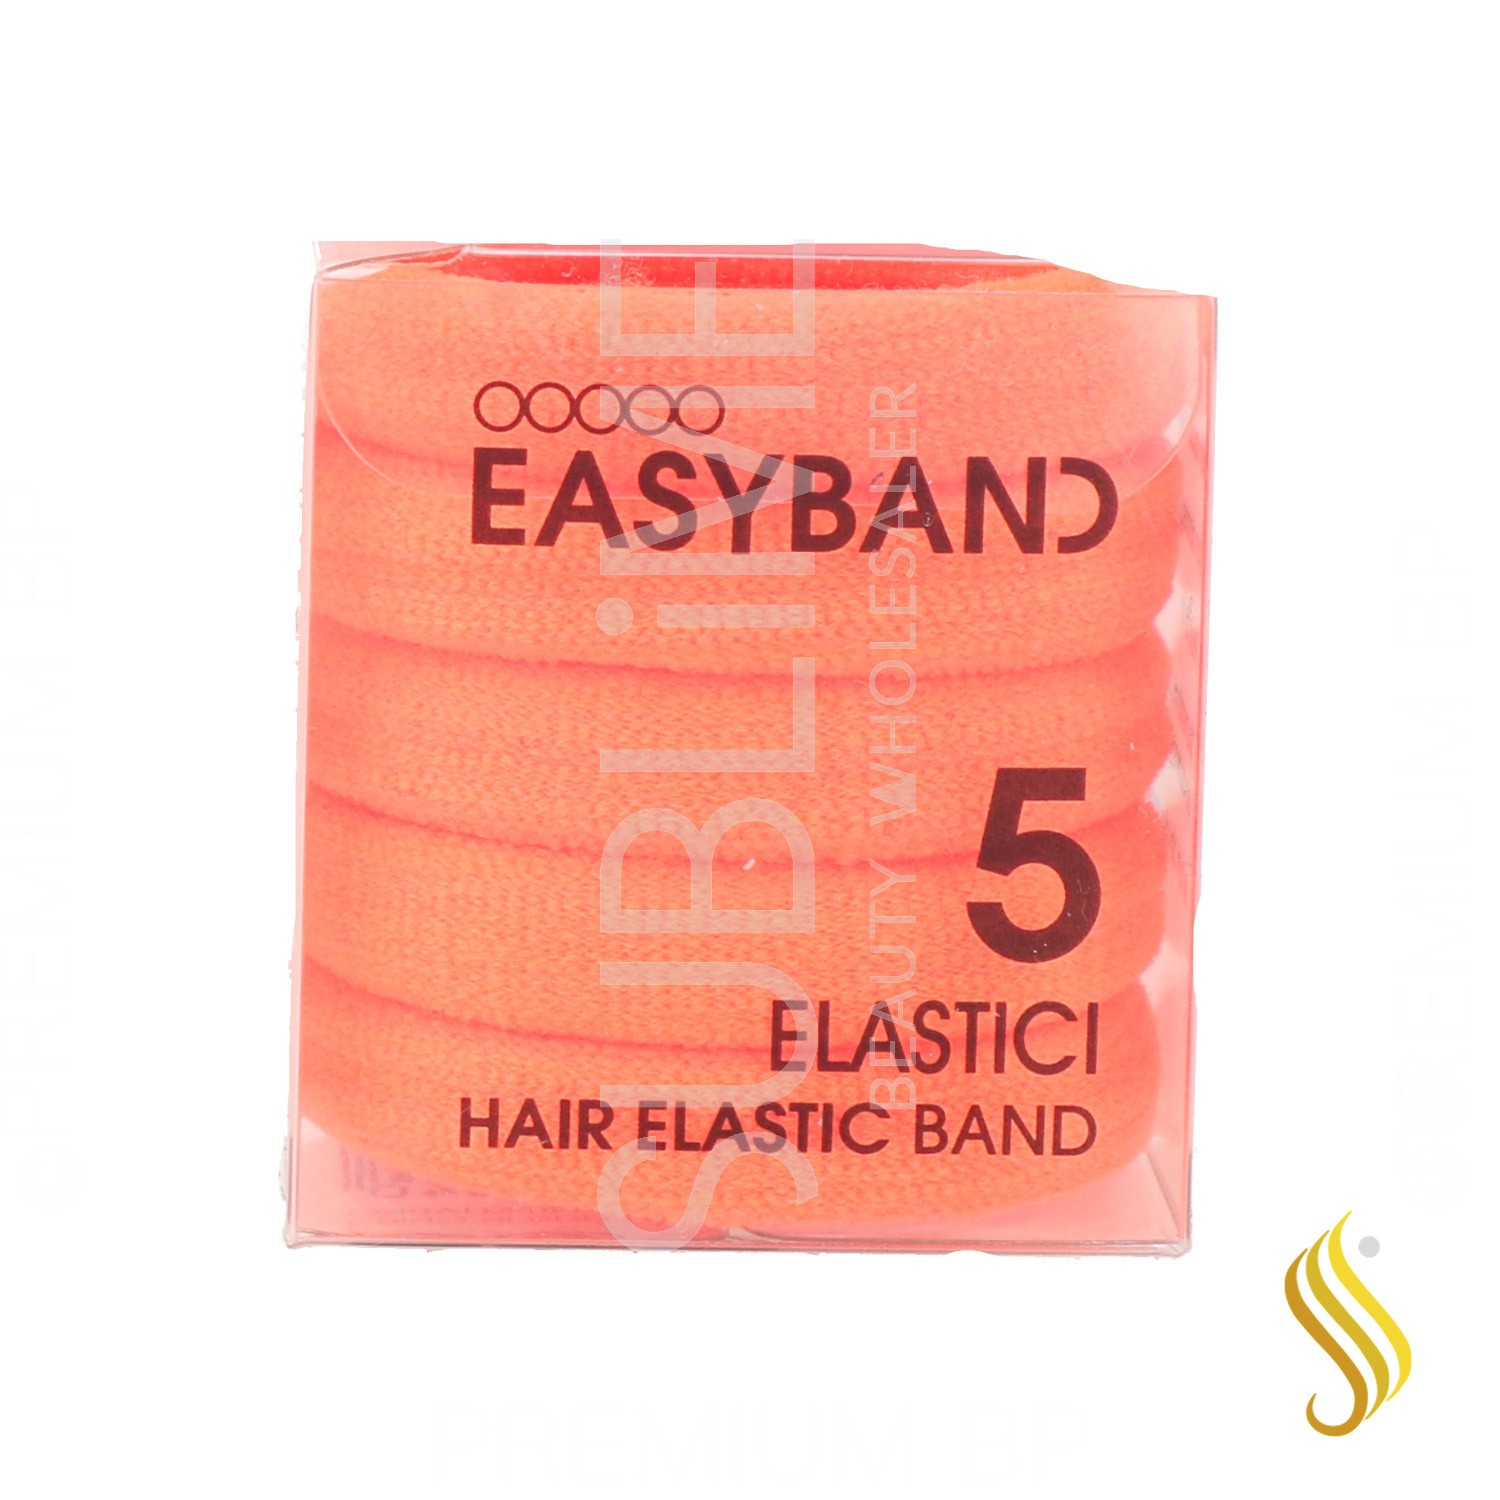 XAN PRO EASY BAND HAIR ELASTIC BAND 1X5U (COLETERO NARANJA)